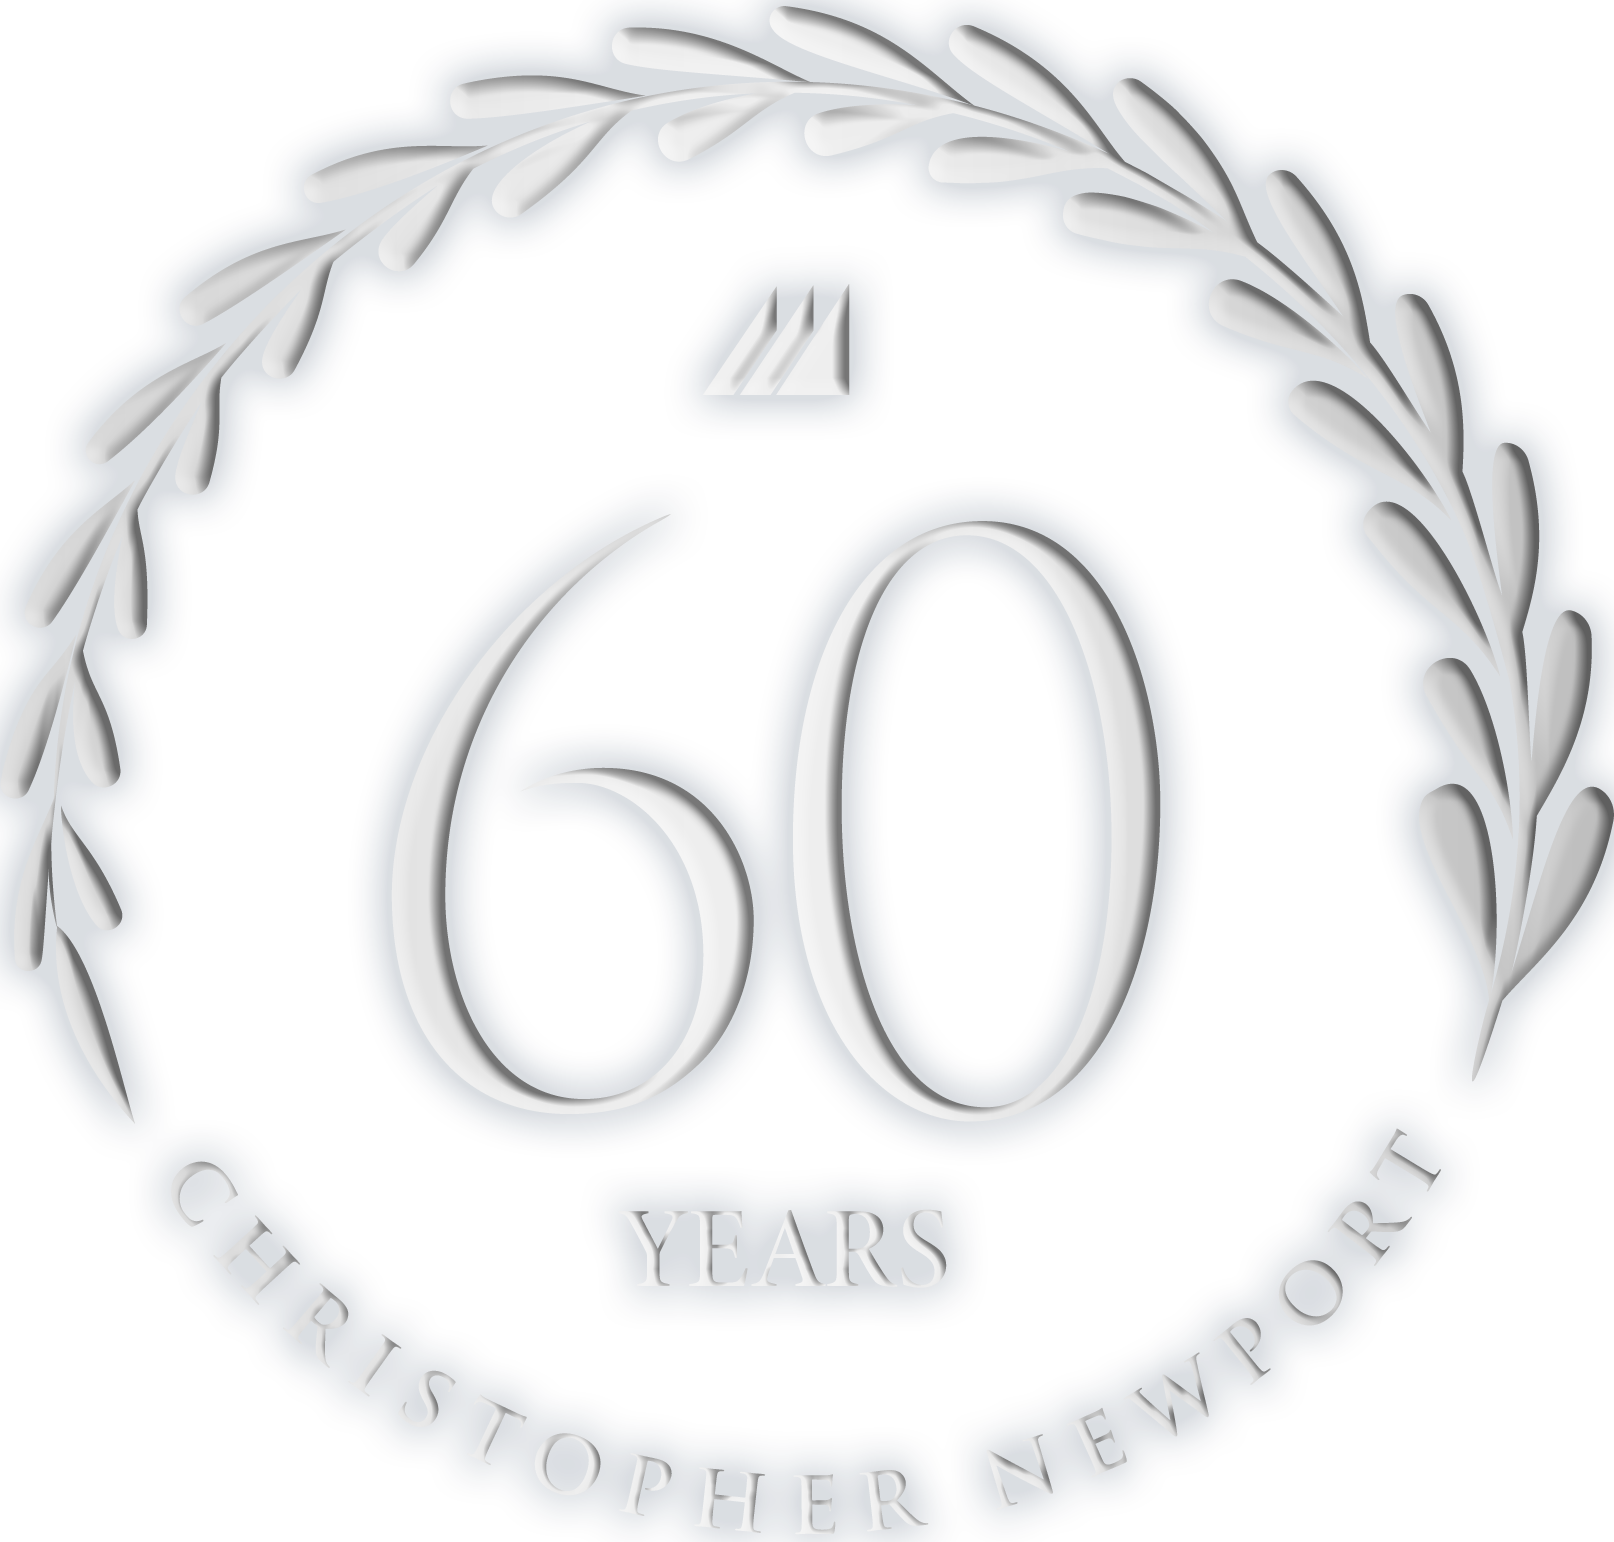 60 Years Christopher Newport logo